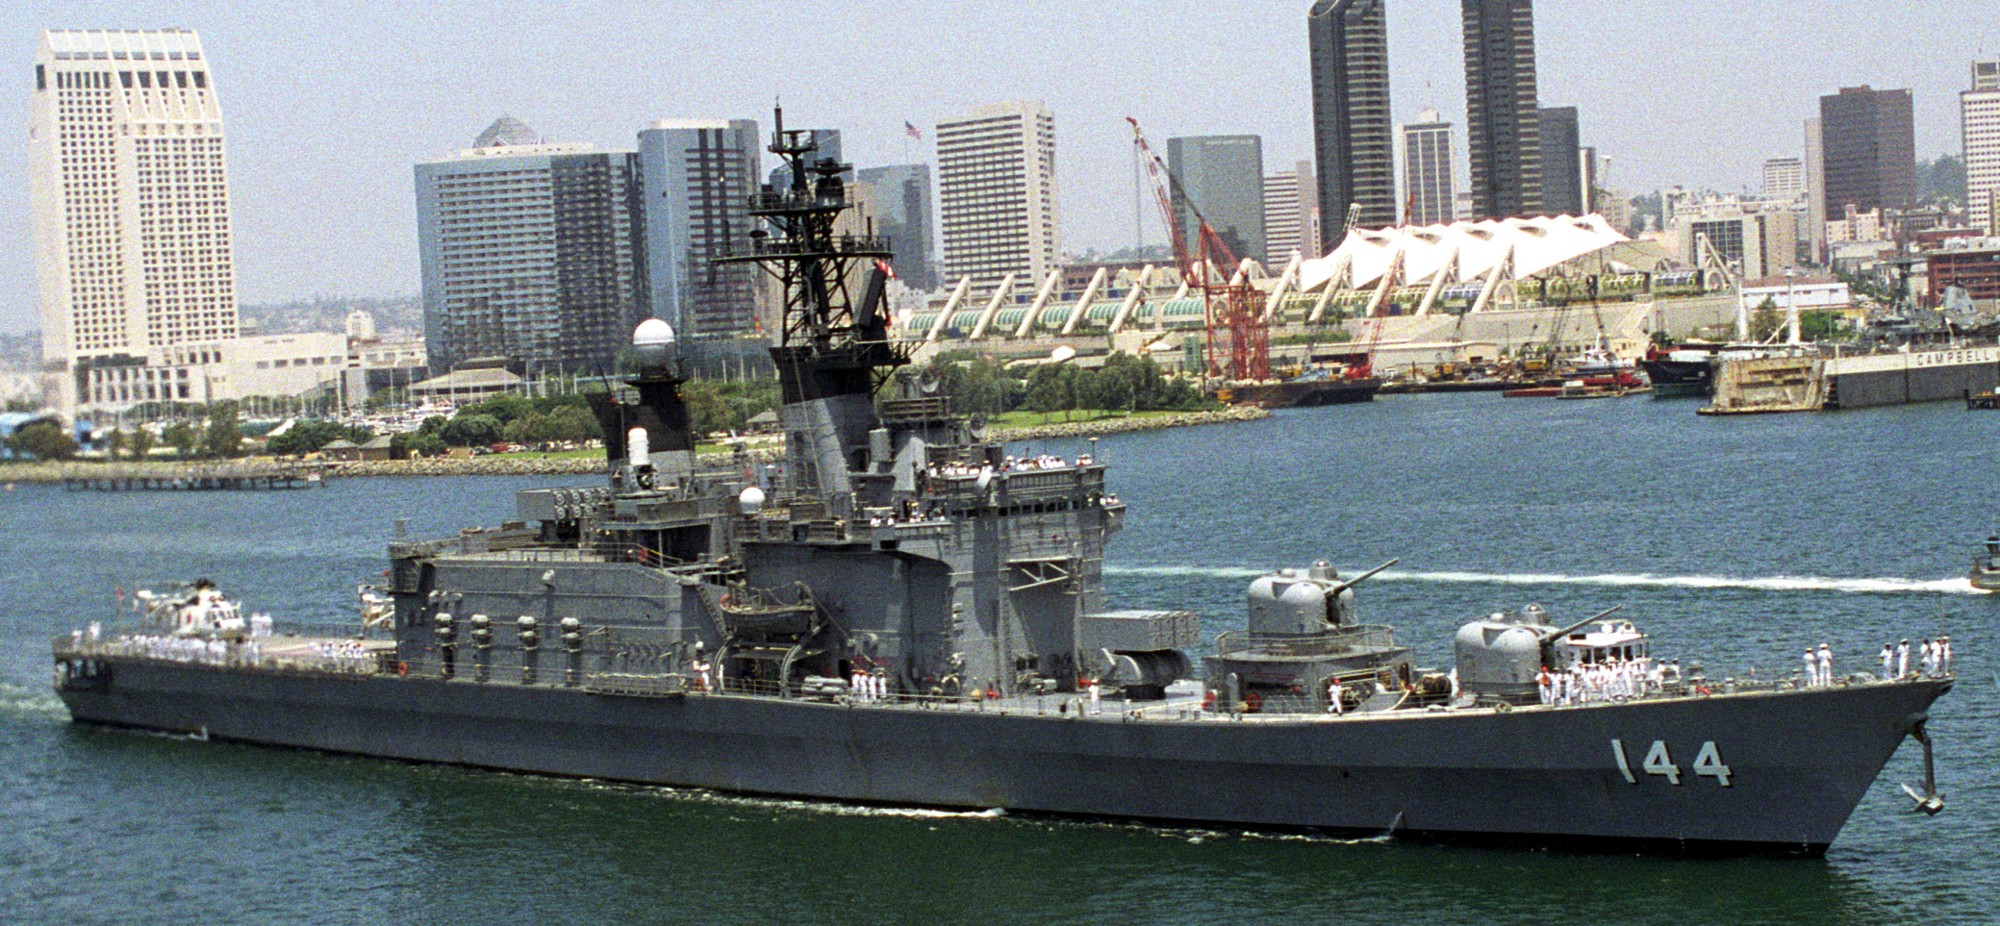 ddh-144 jds kurama shirane class helicopter destroyer japan maritime self defense force jmsdf 52